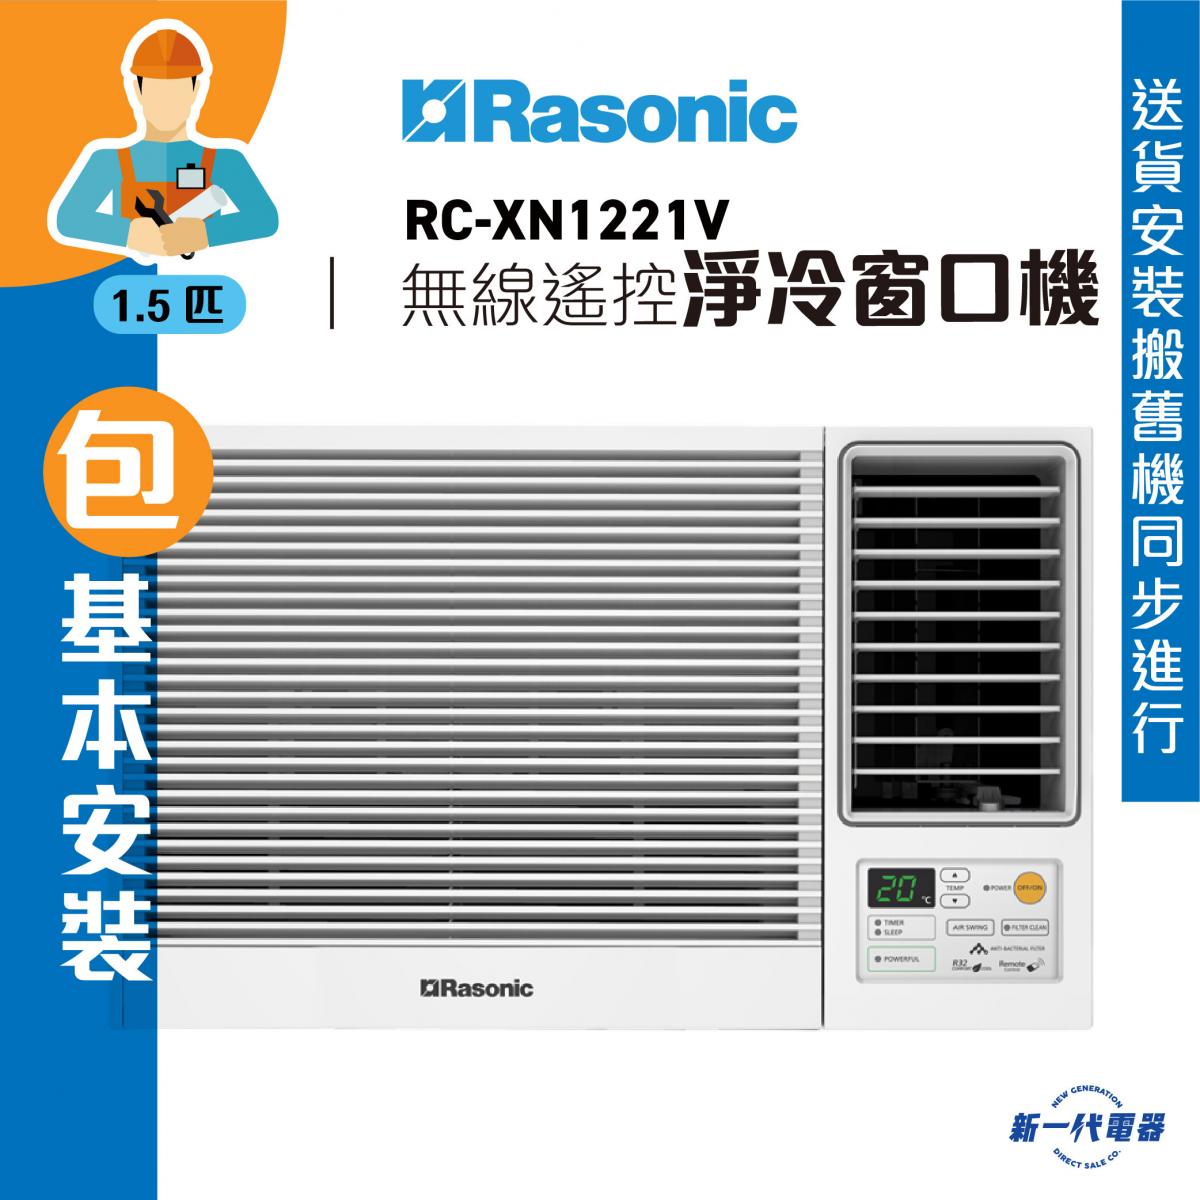 RCXN1221V (Basic installation)Window Type Air Conditioner(1.5HP) (RC-XN1221V)